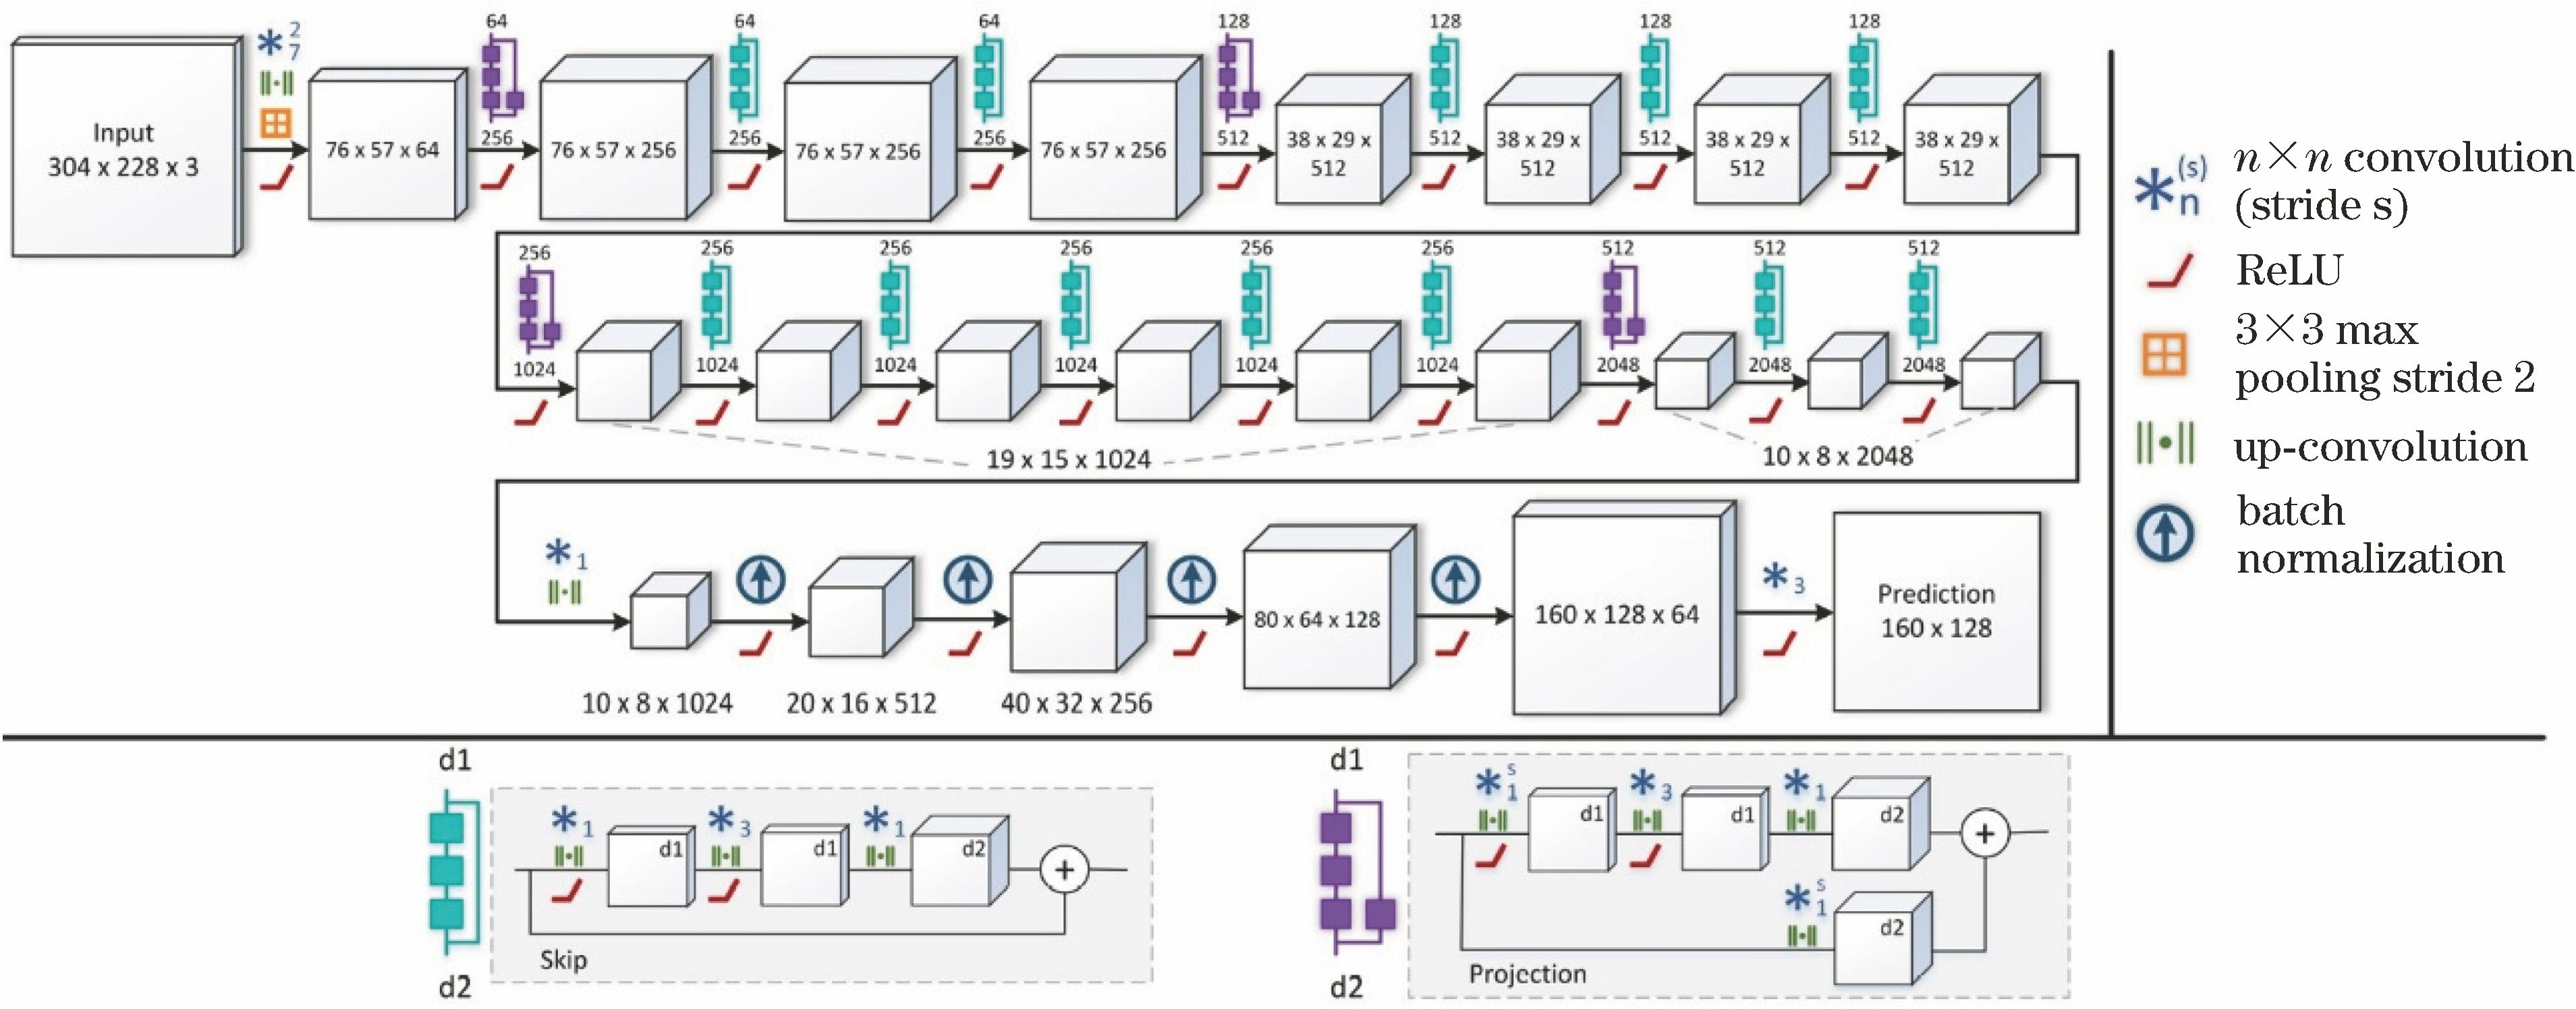 Network architecture proposed by Laina et al.[27]